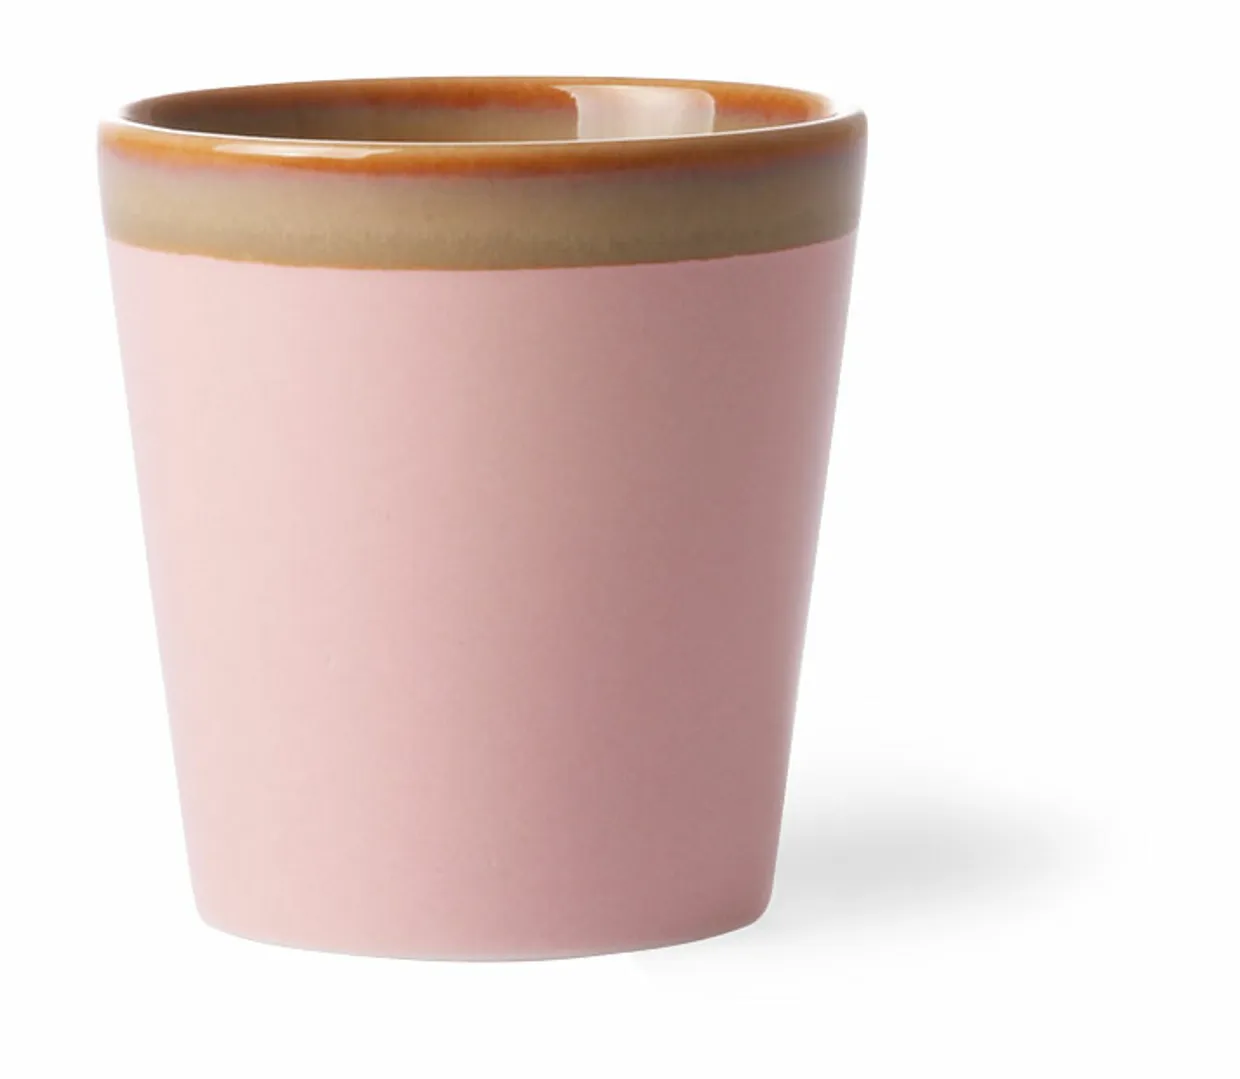 70s ceramics: coffee mug, pink